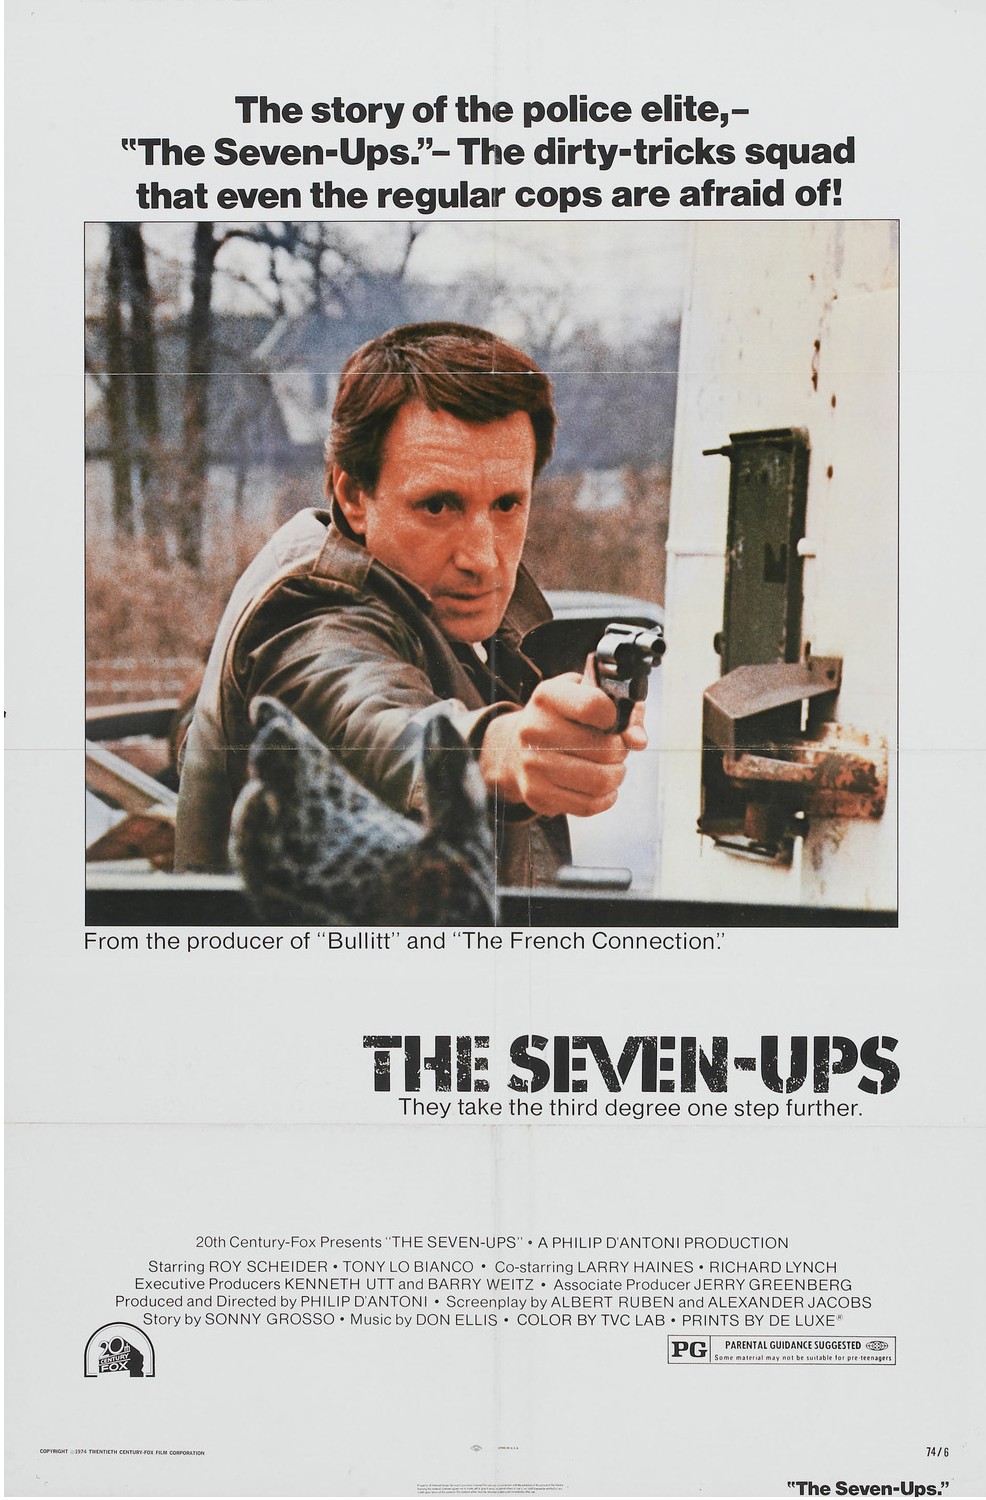 THE SEVEN-UPS